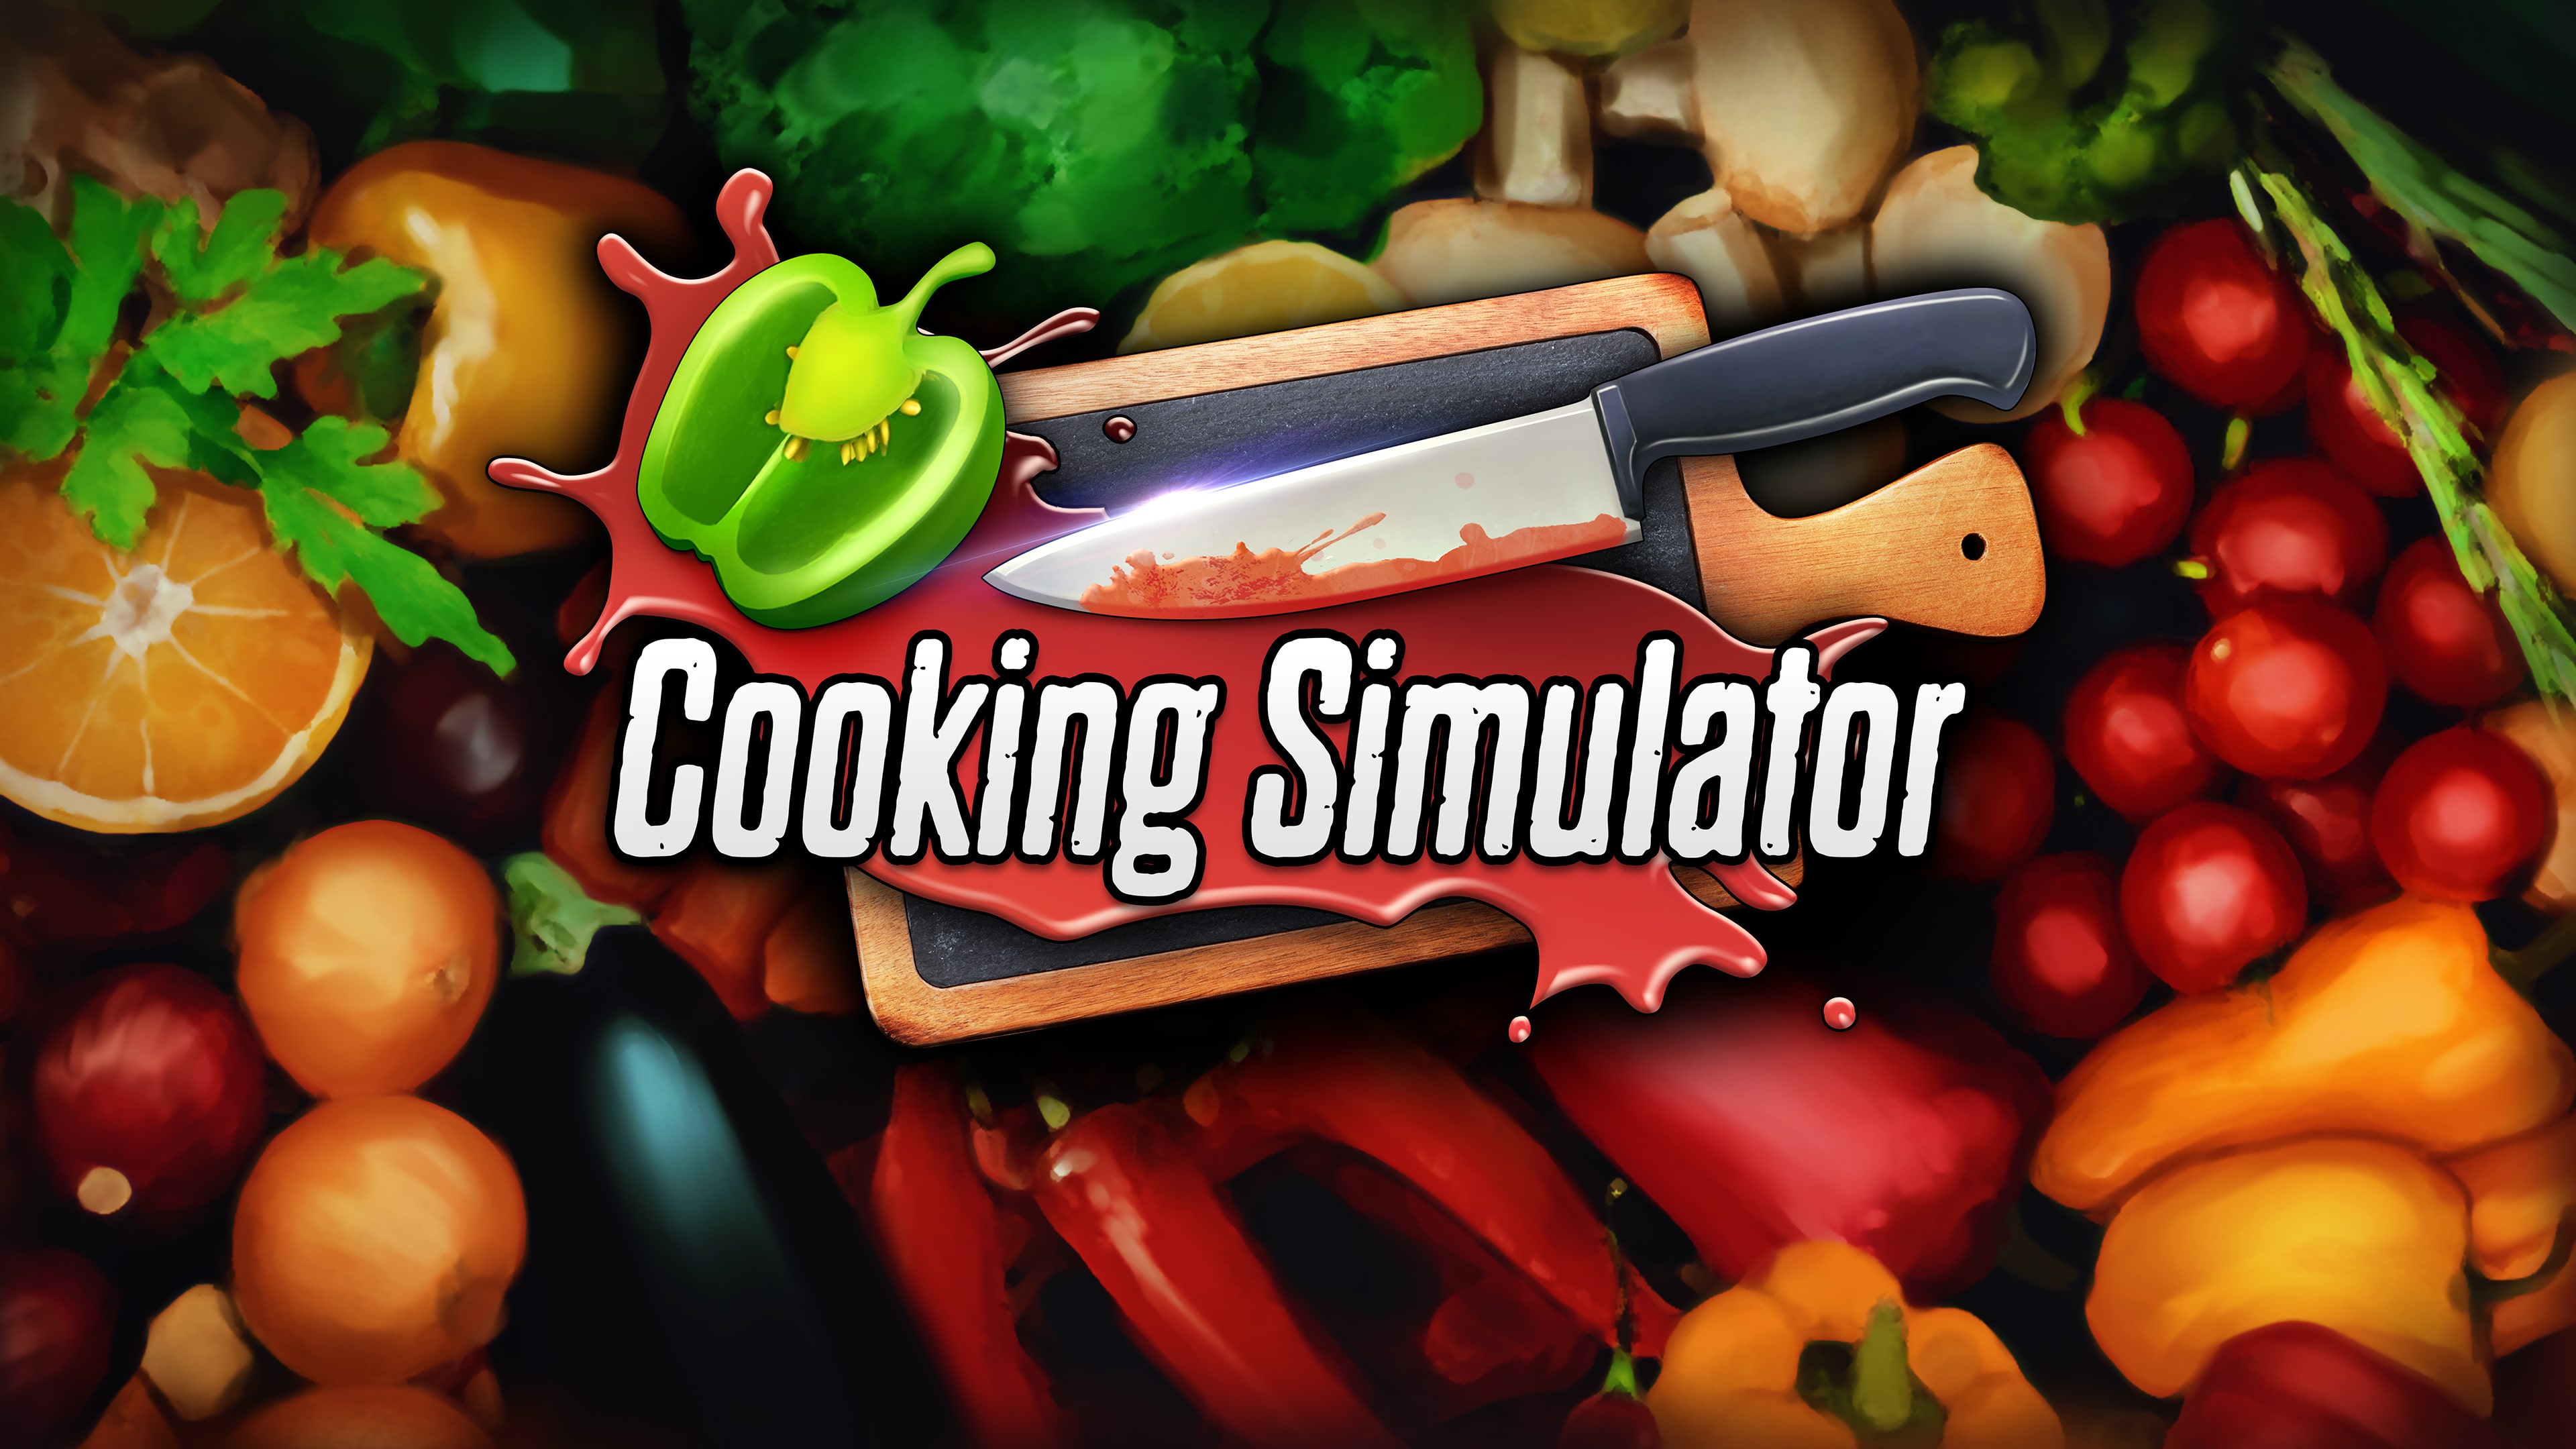 Chef Simulator on Steam